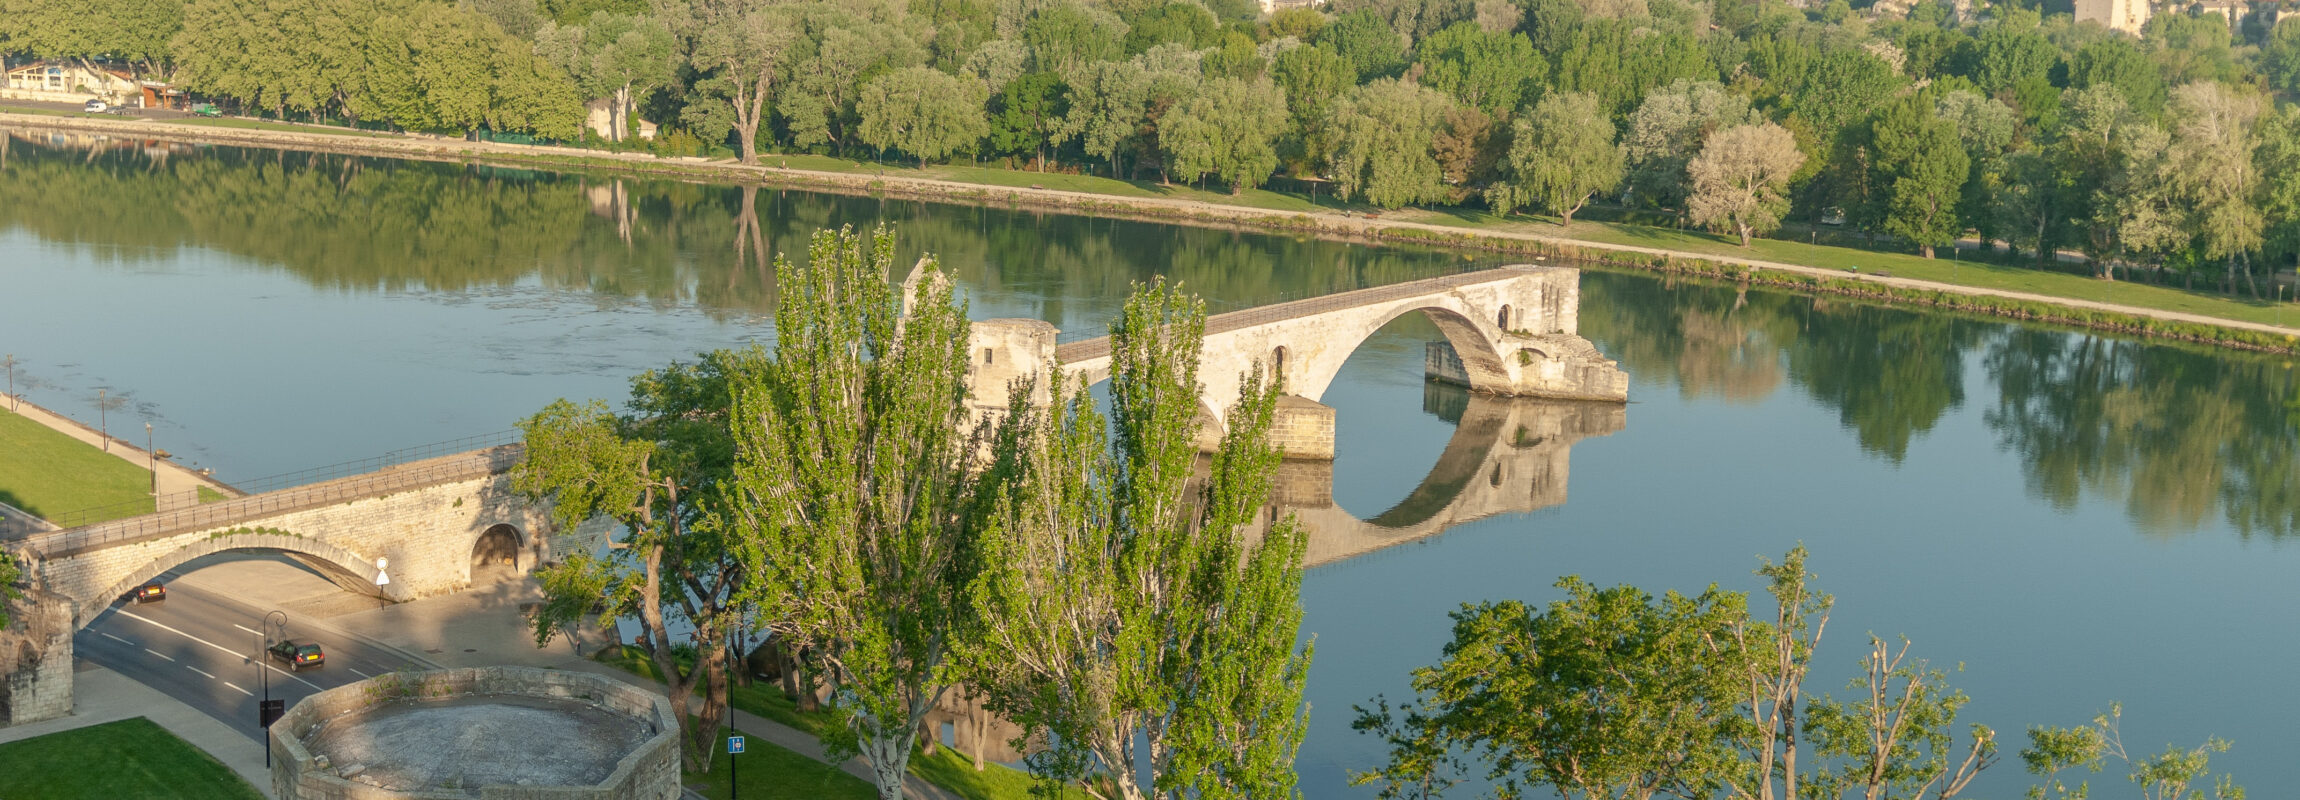 The "Pont d'Avignon", famous bridge in Provence